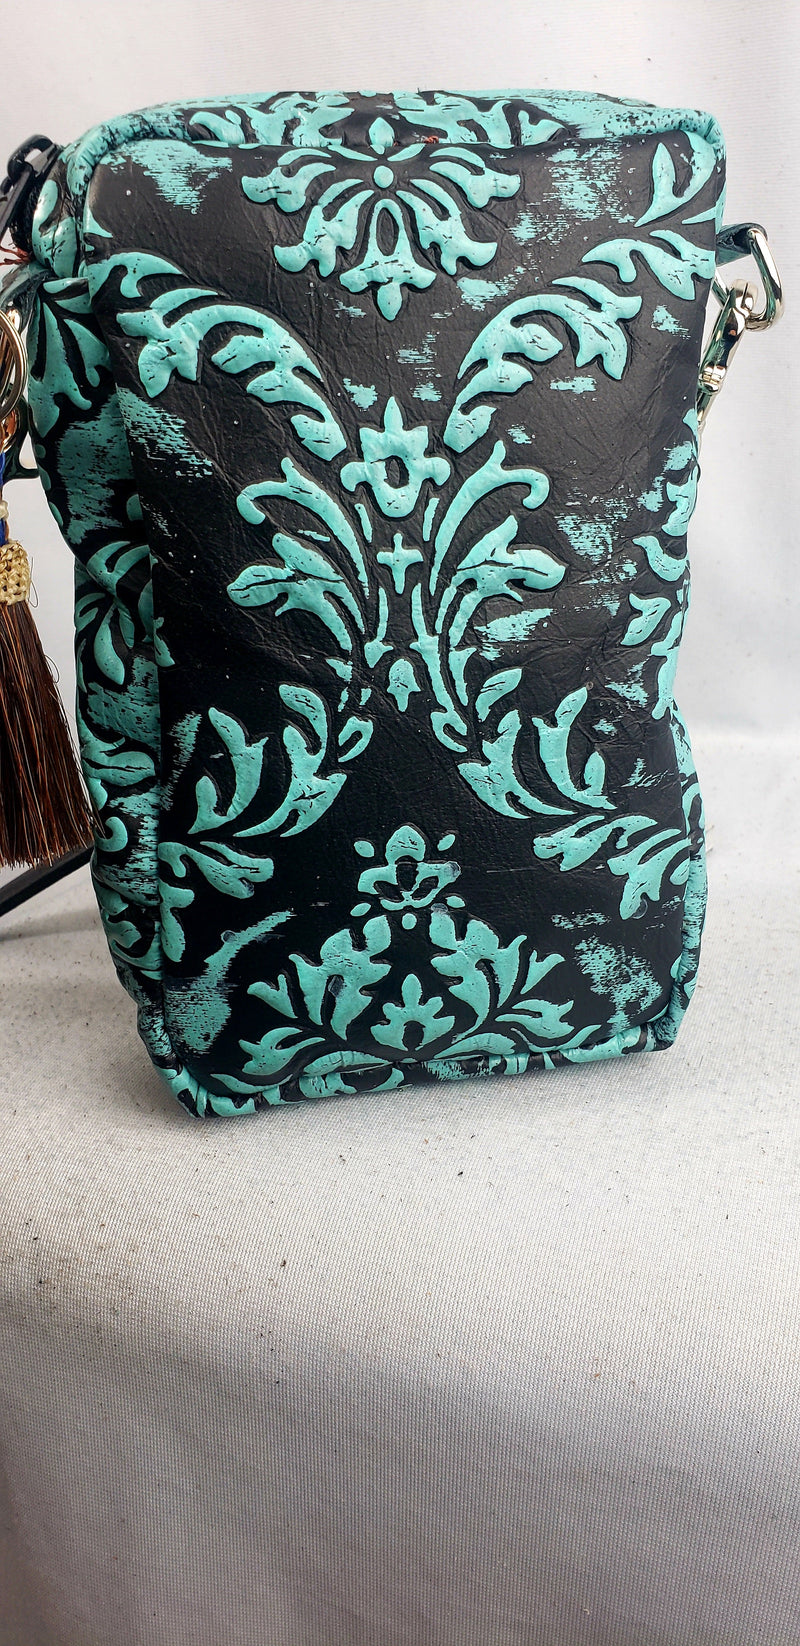 Turquoise Feather Joann Style Crossbody Bag